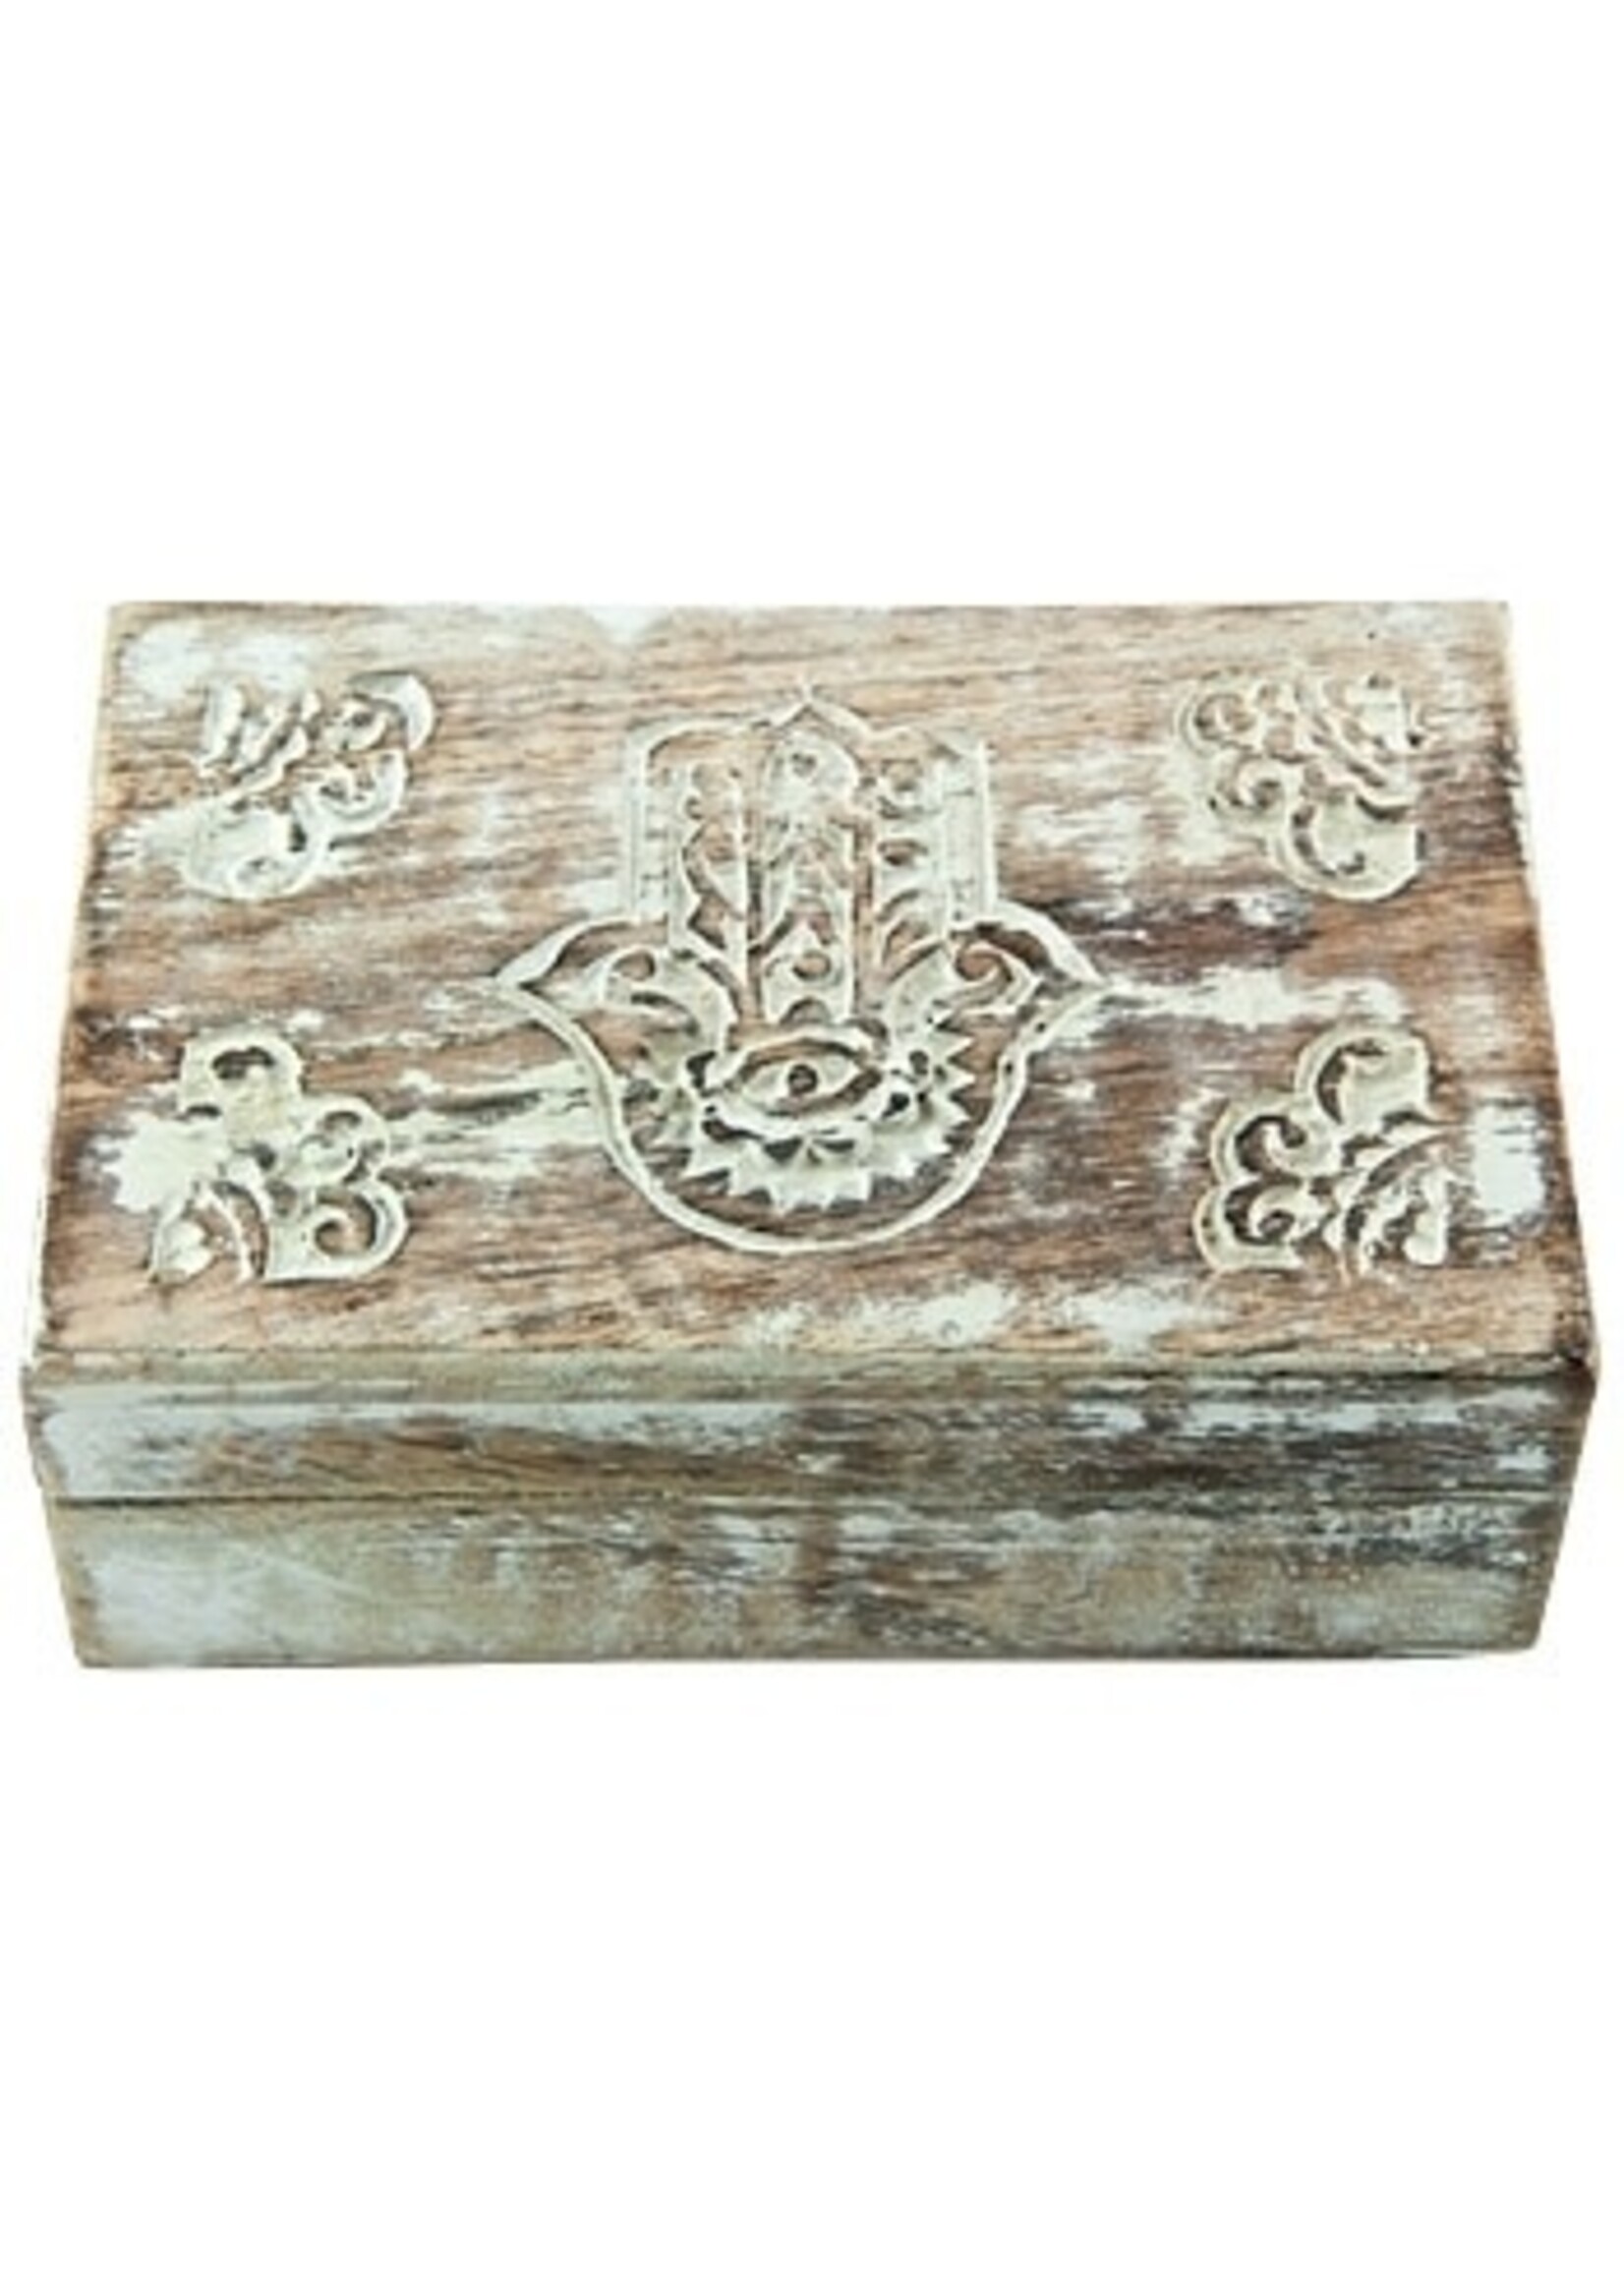 Hamsa Hand Carved Wooden Box - 4" x 6"